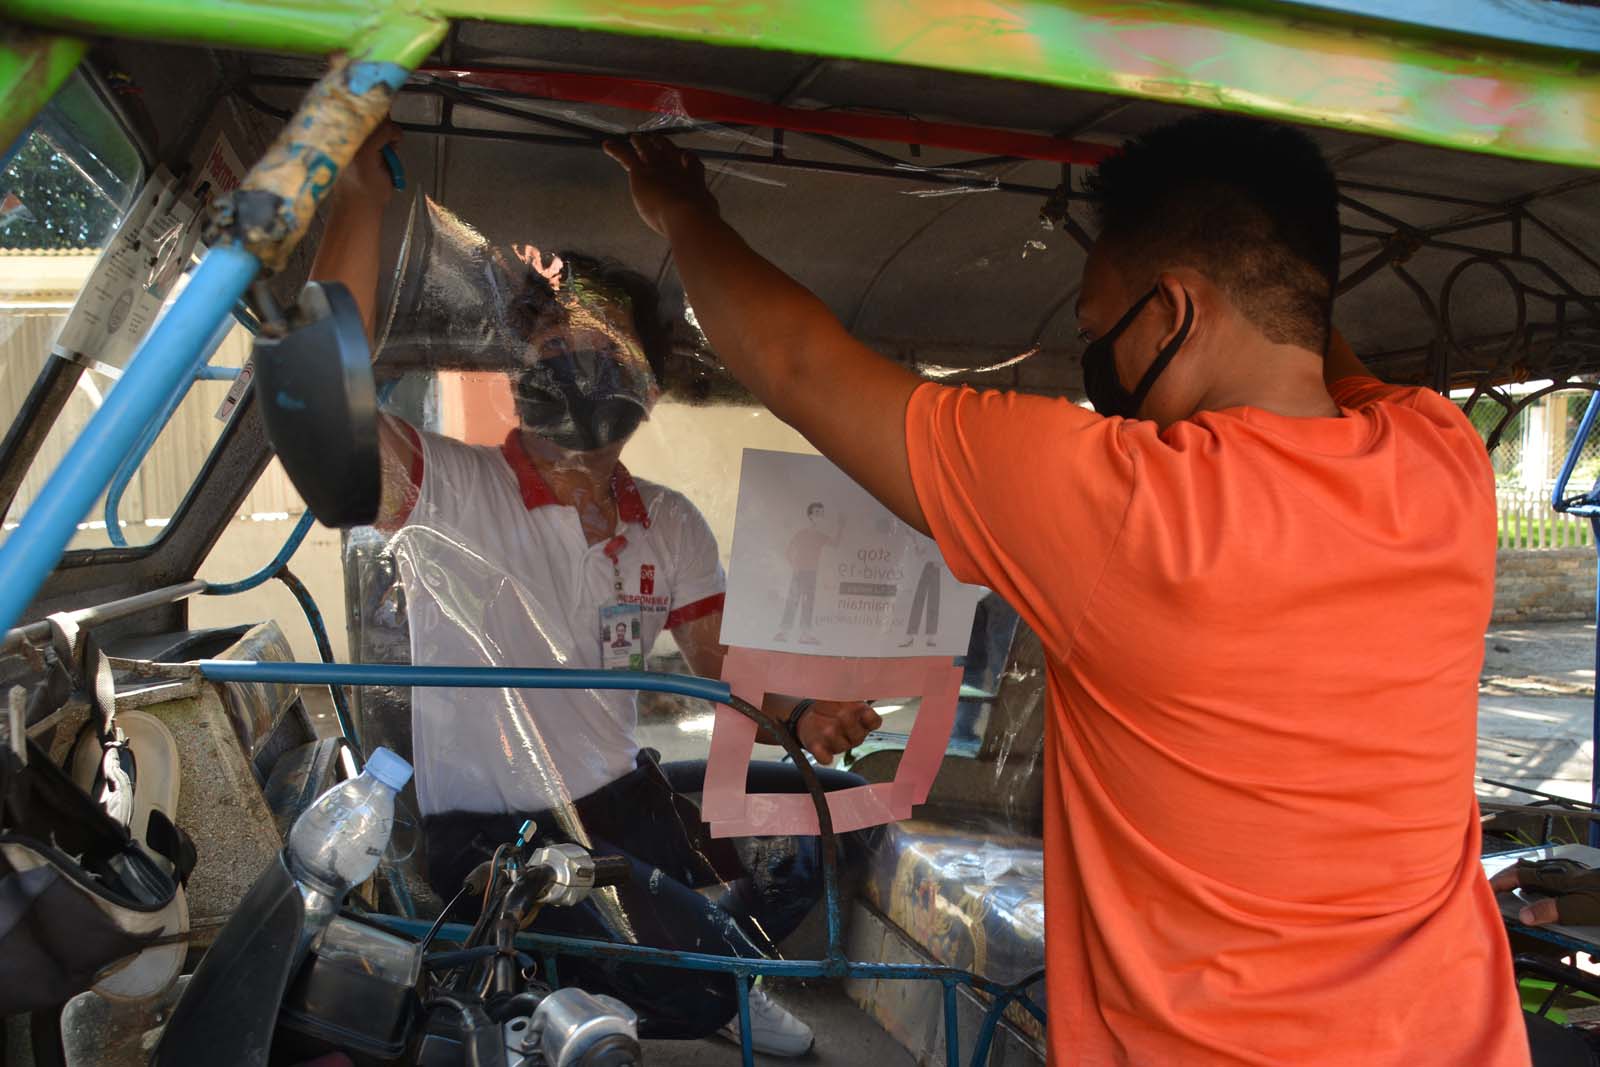 SU provides ‘pedicab shields’ to protect drivers, passengers